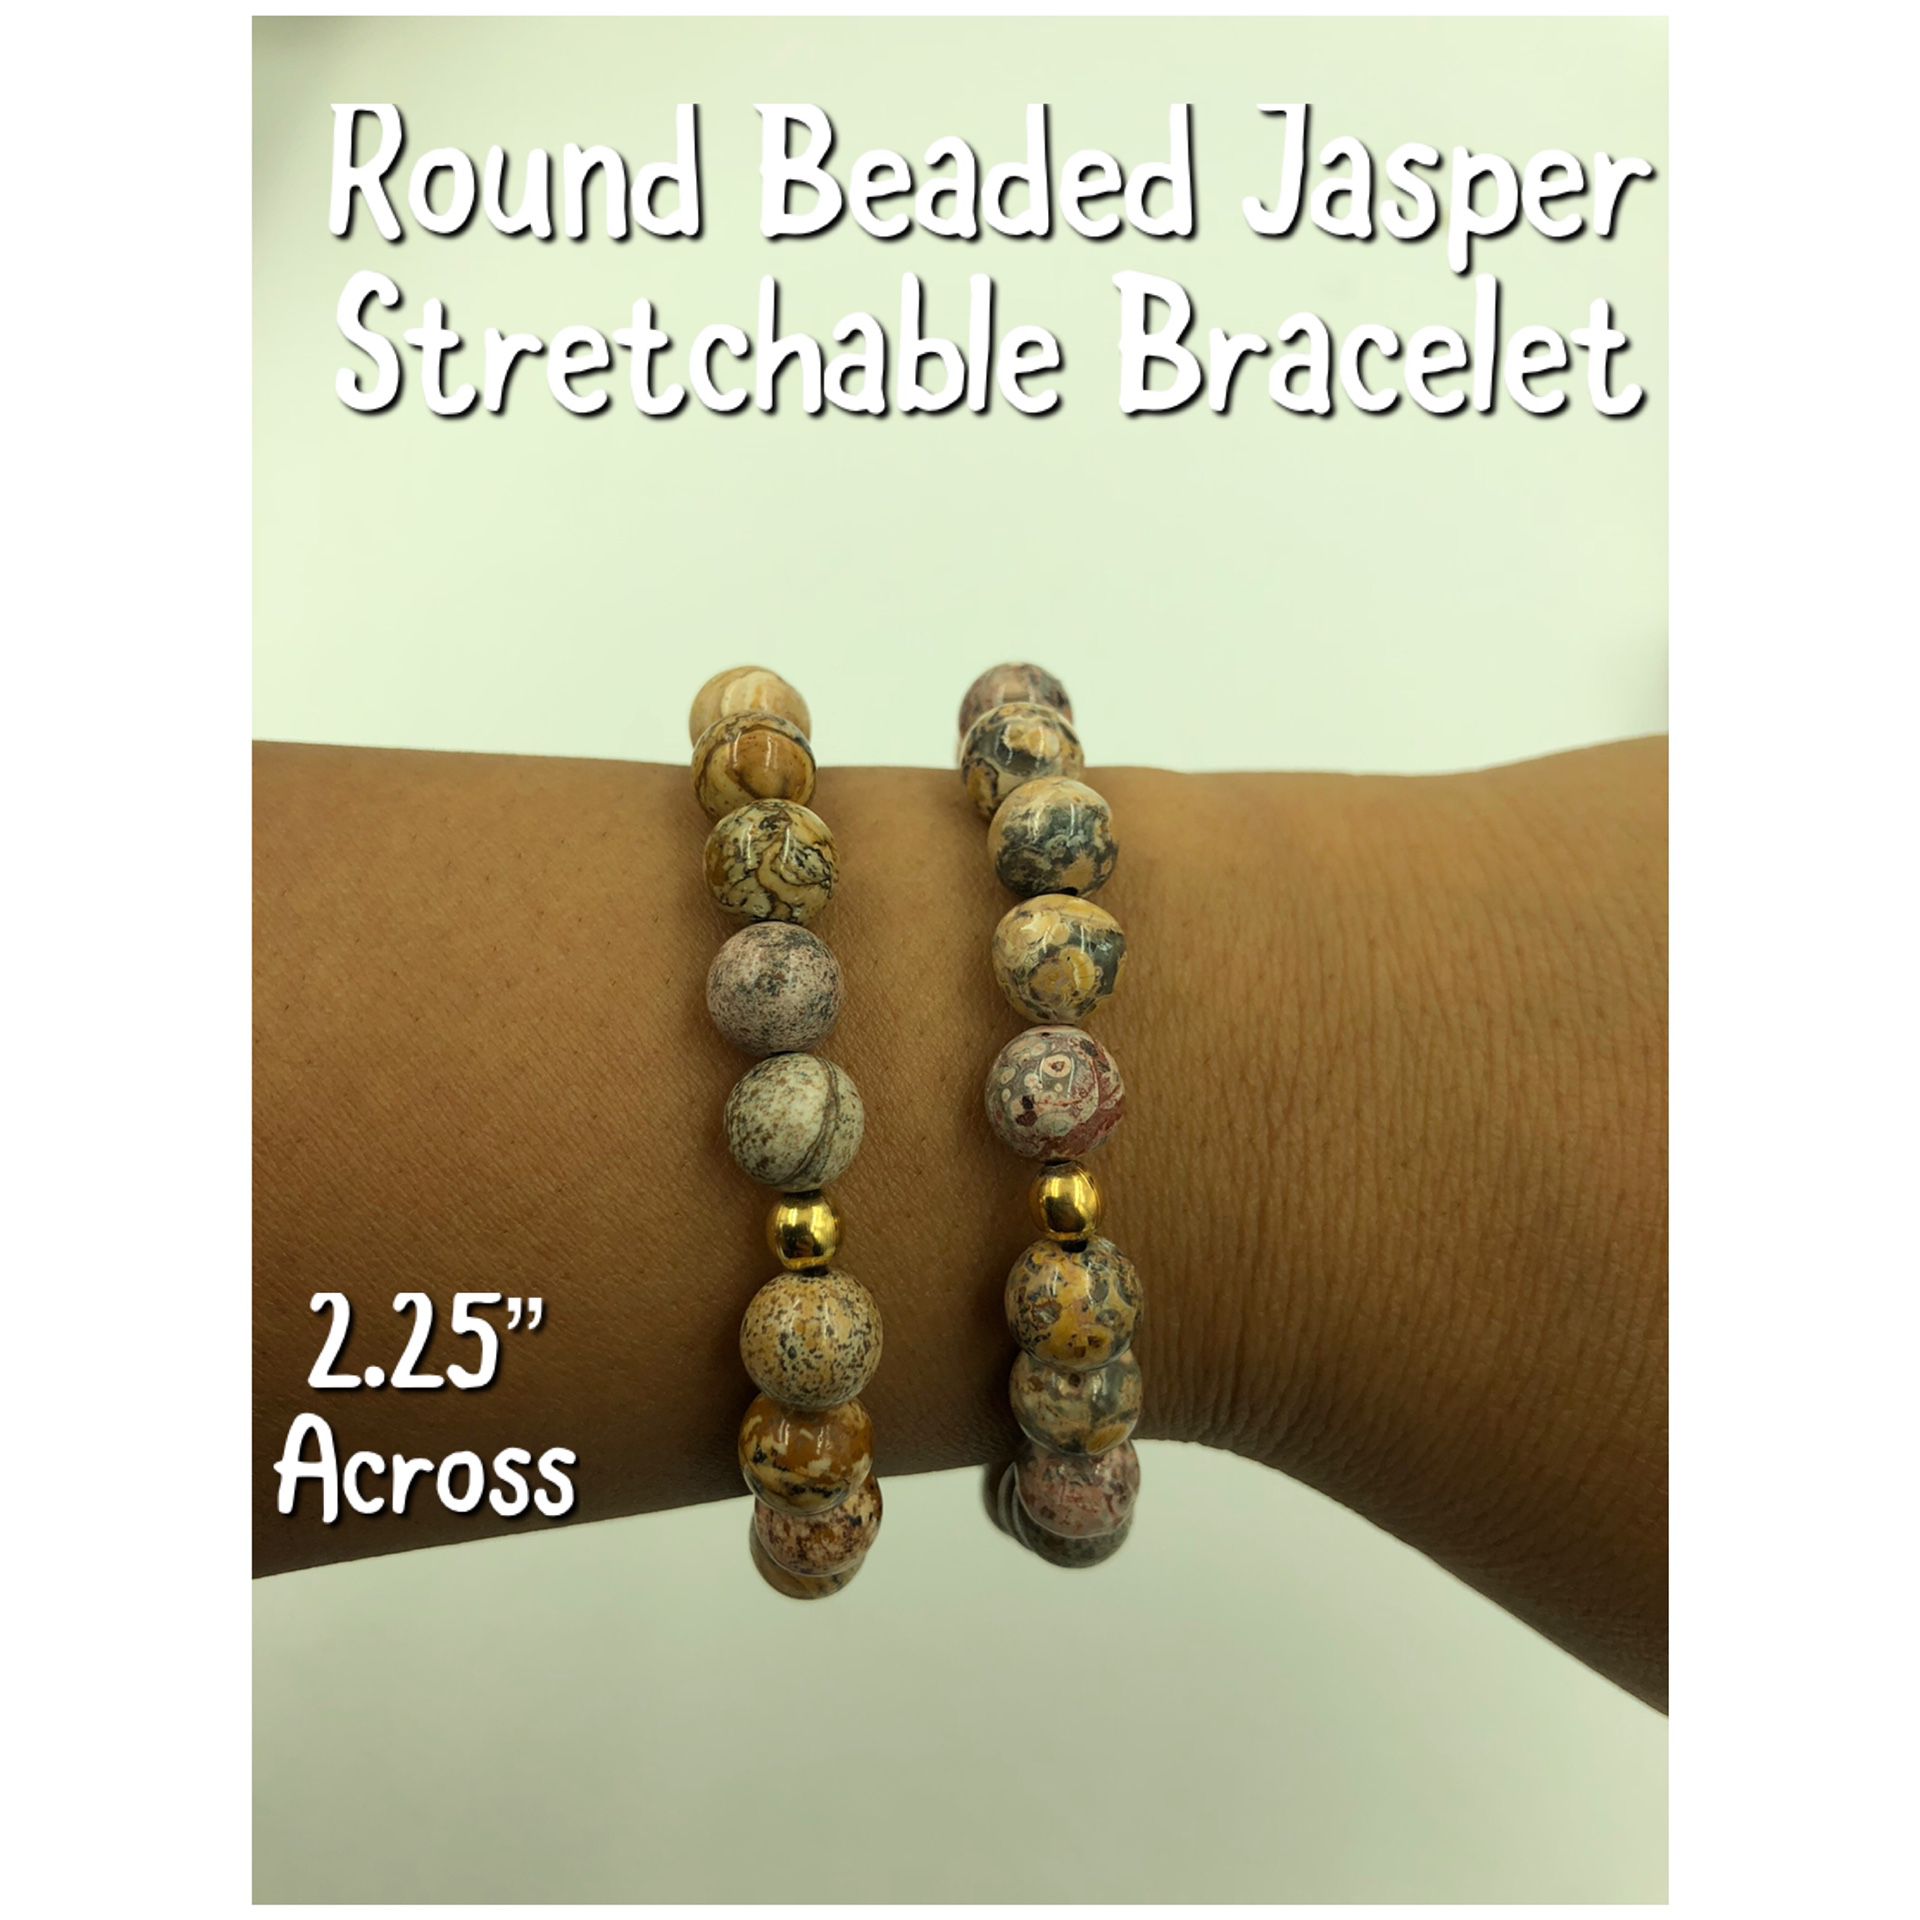 Round Beaded Jasper Stretchable Bracelet